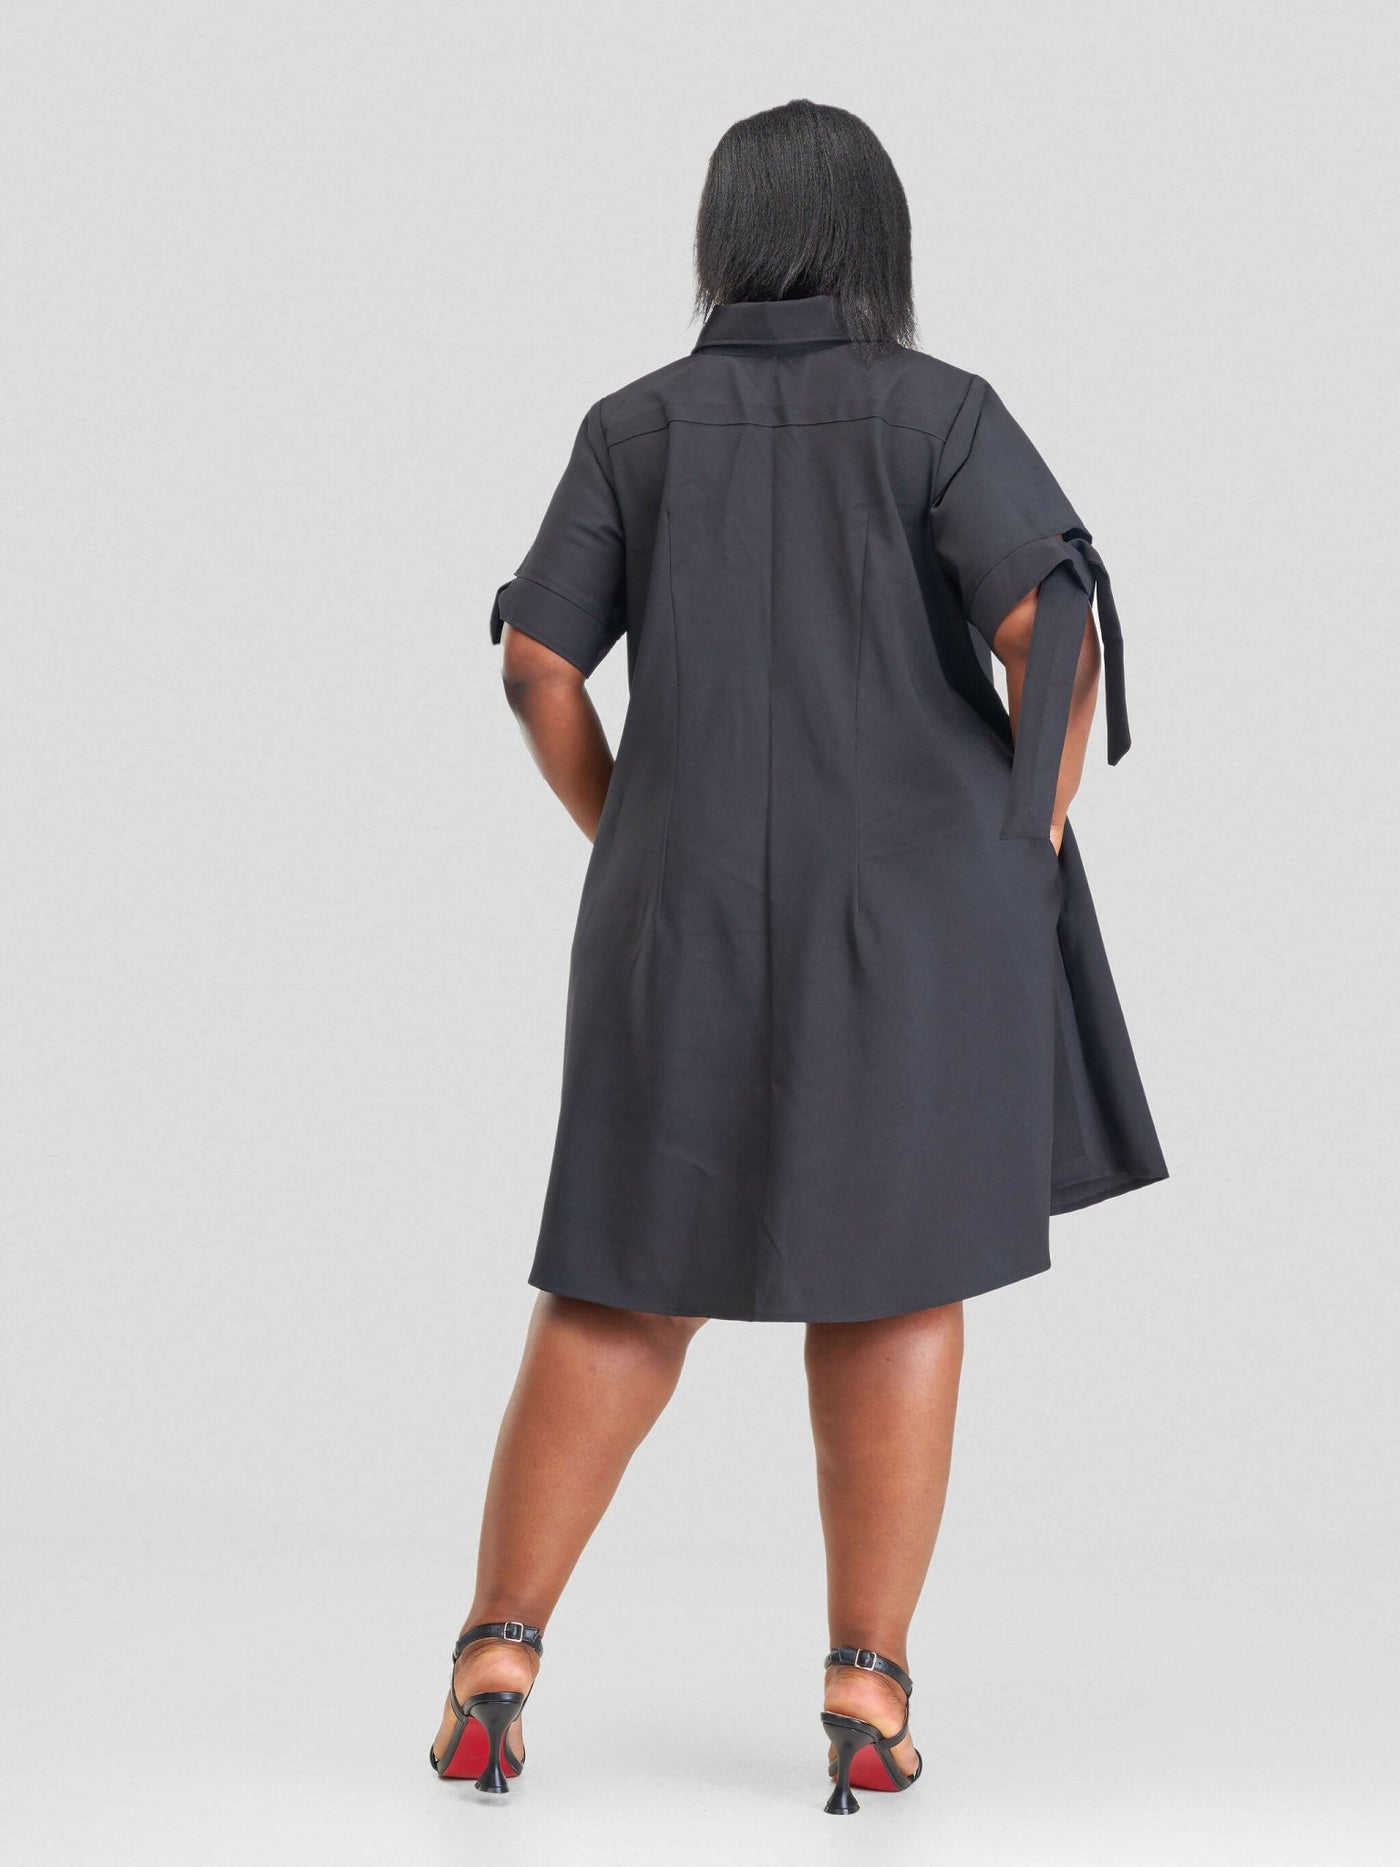 Hando Afrikan Designs Njeri Shirt Dress - Black - Shopzetu